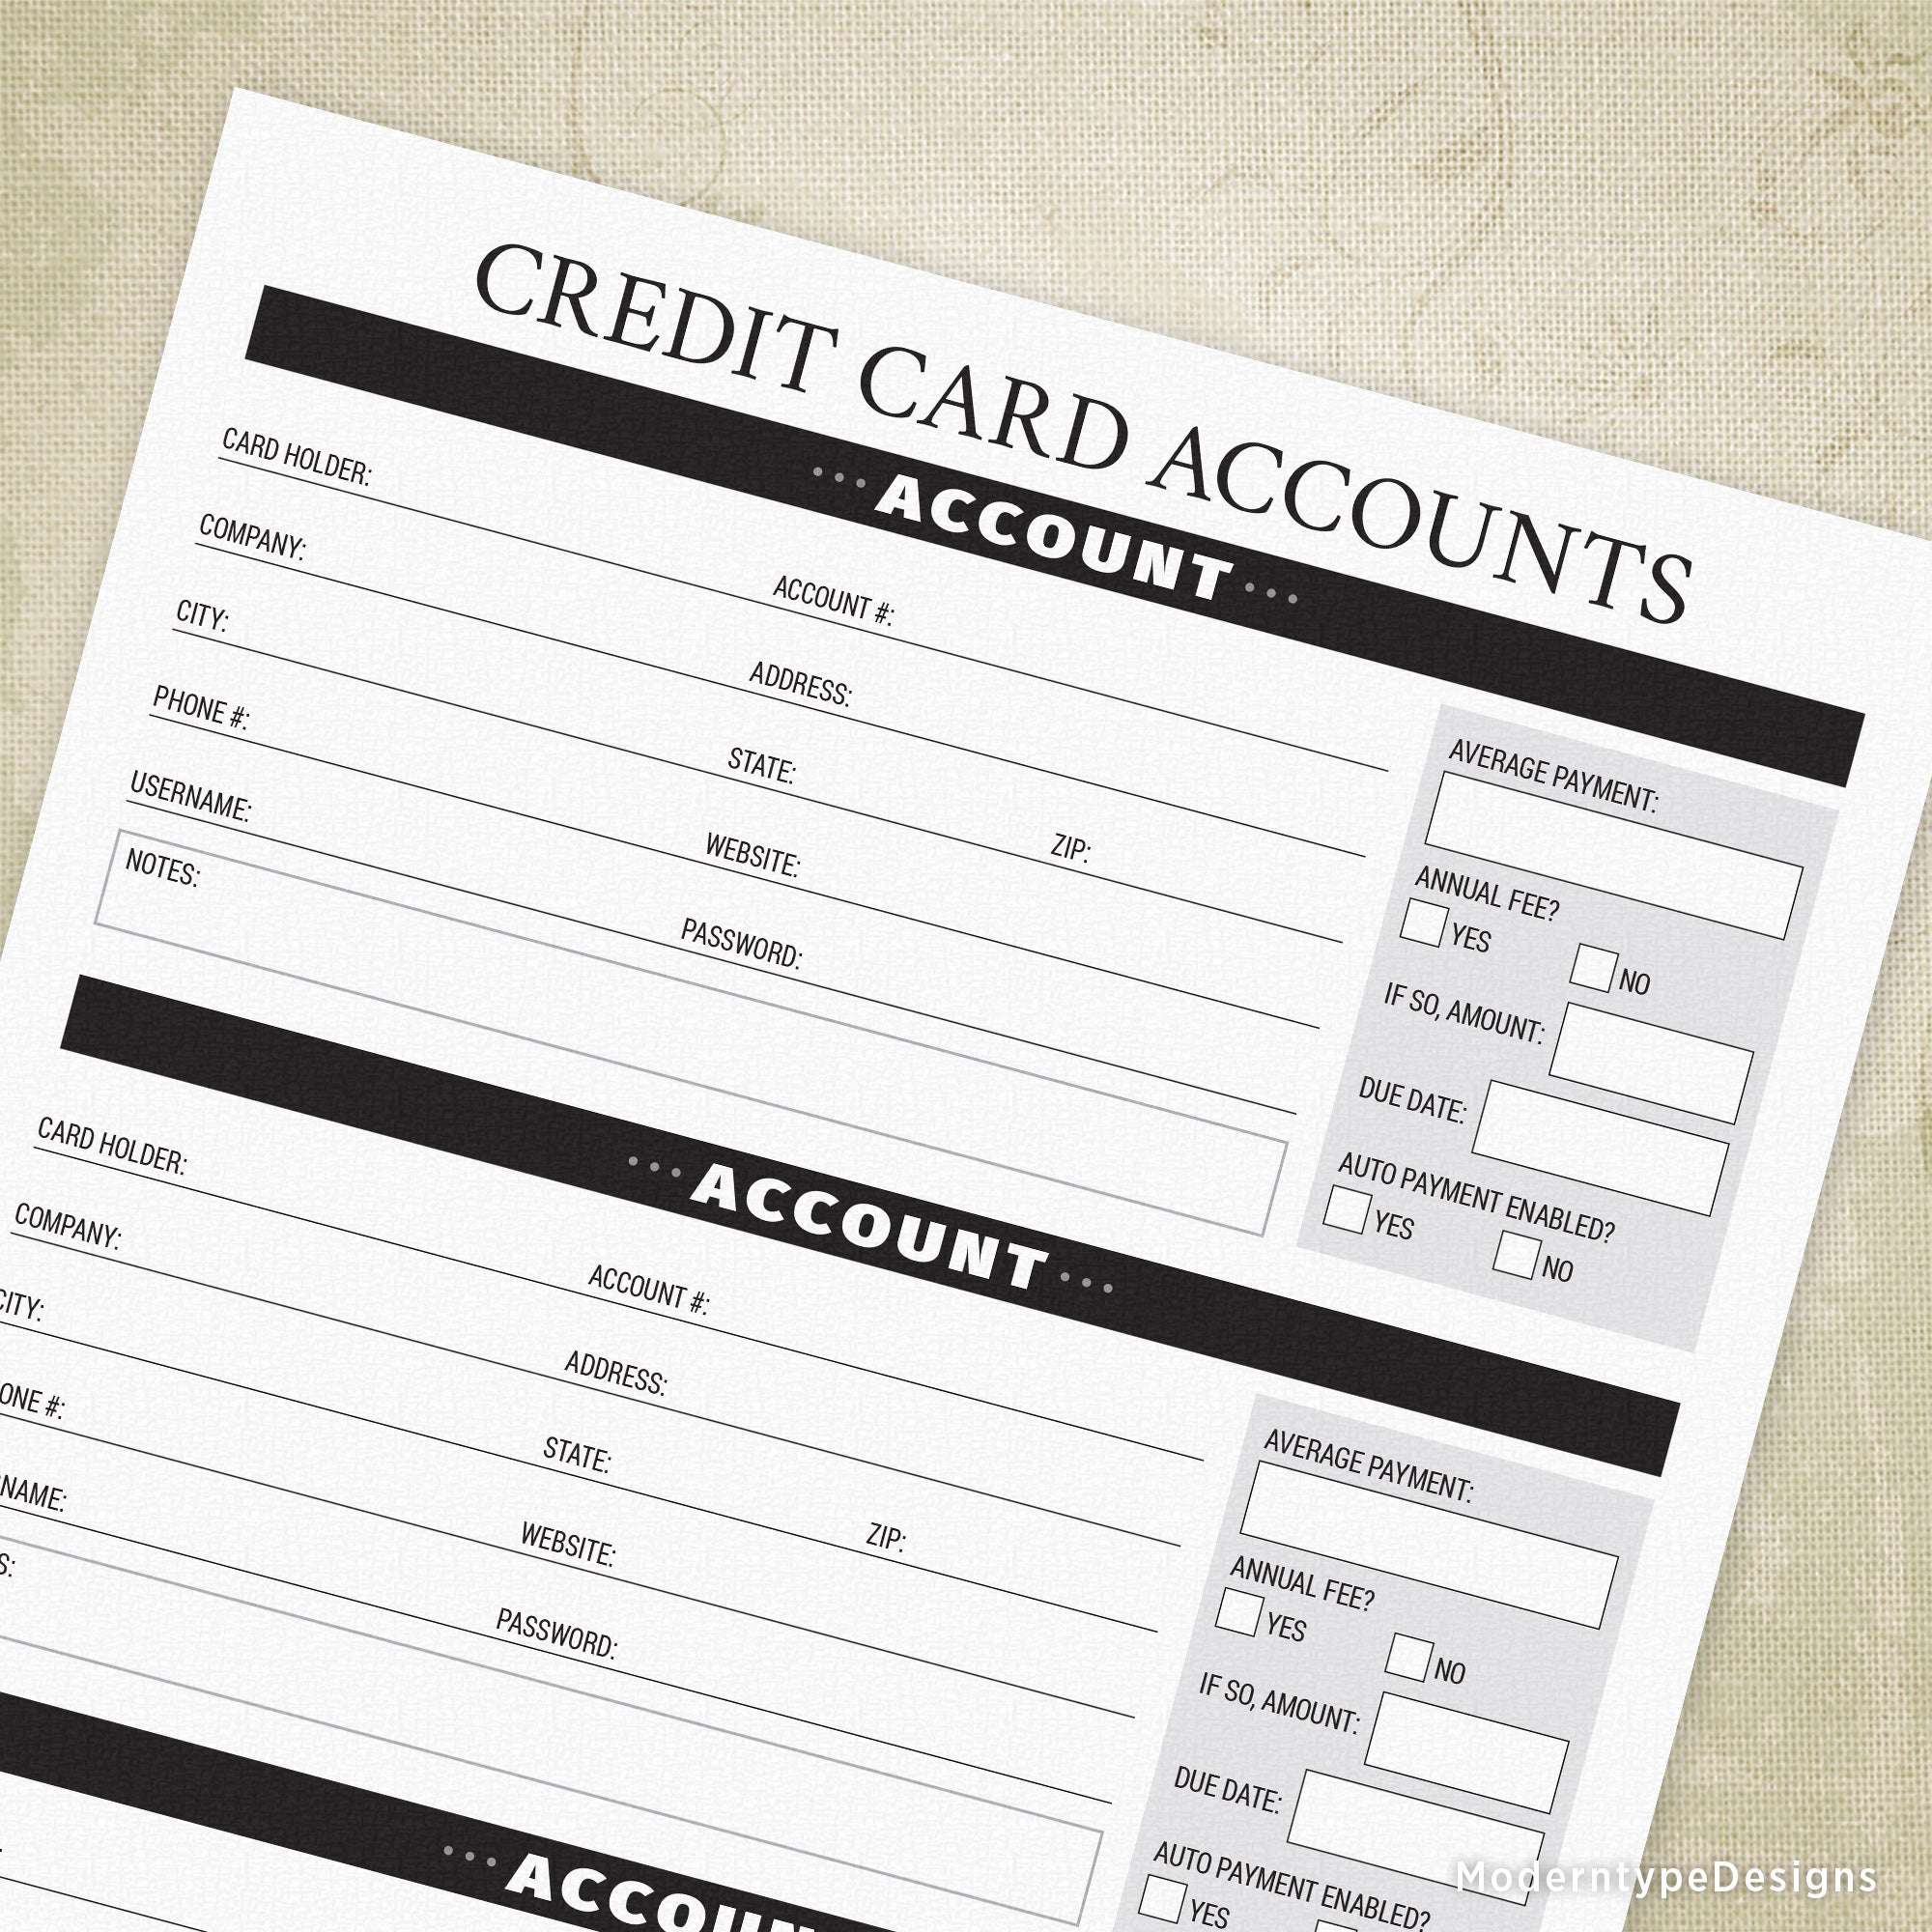 Credit Card Accounts Printable - End of Life